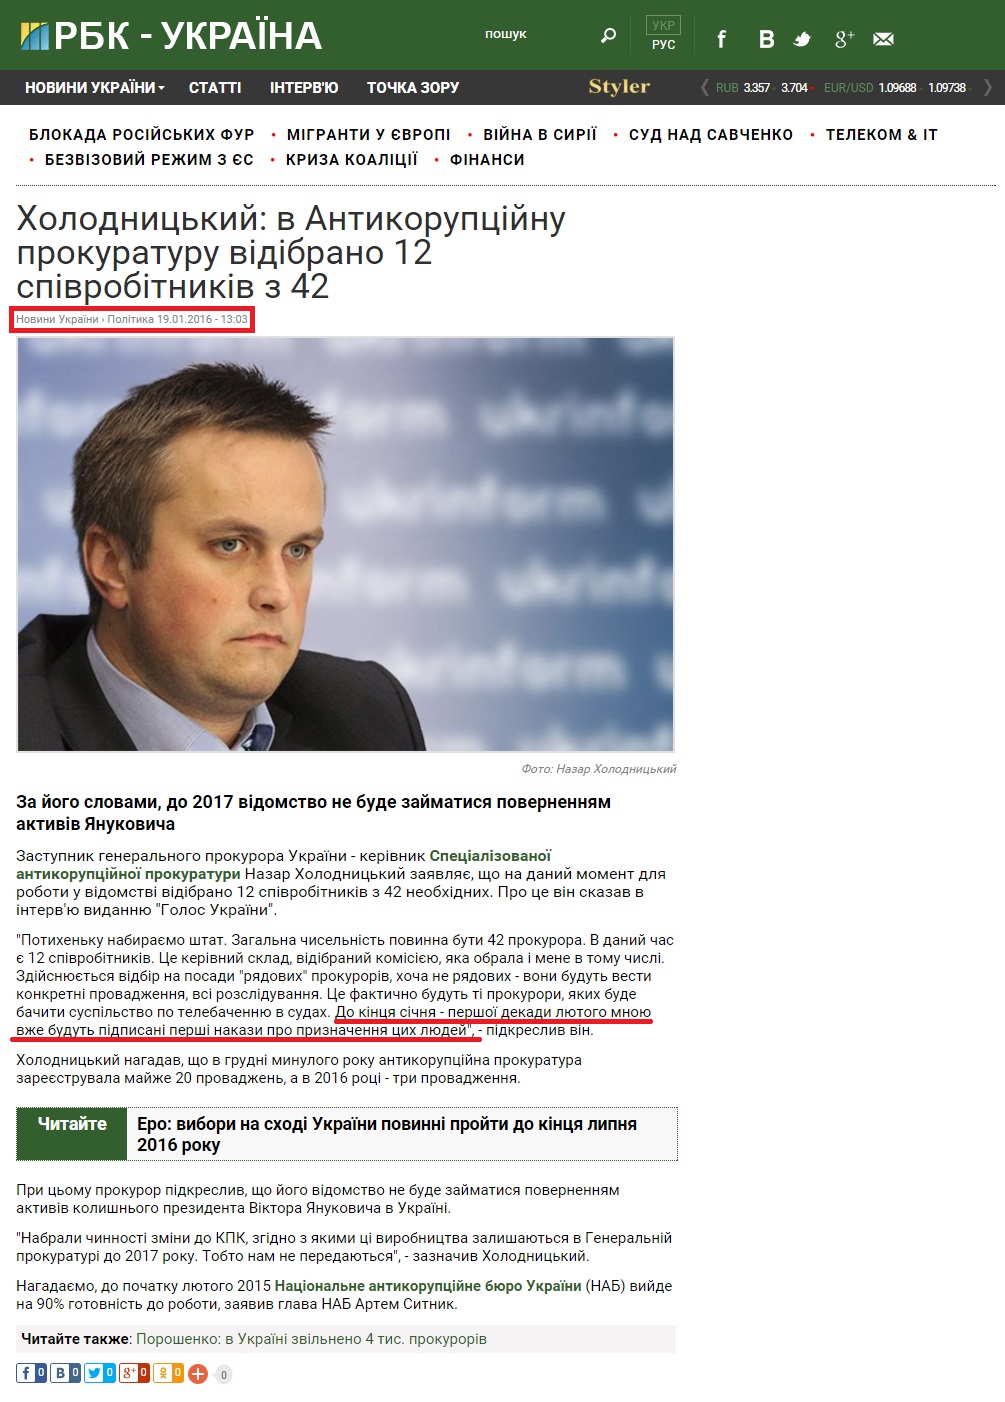 https://www.rbc.ua/ukr/news/holodnitskiy-antikorruptsionnuyu-prokuraturu-1453201466.html